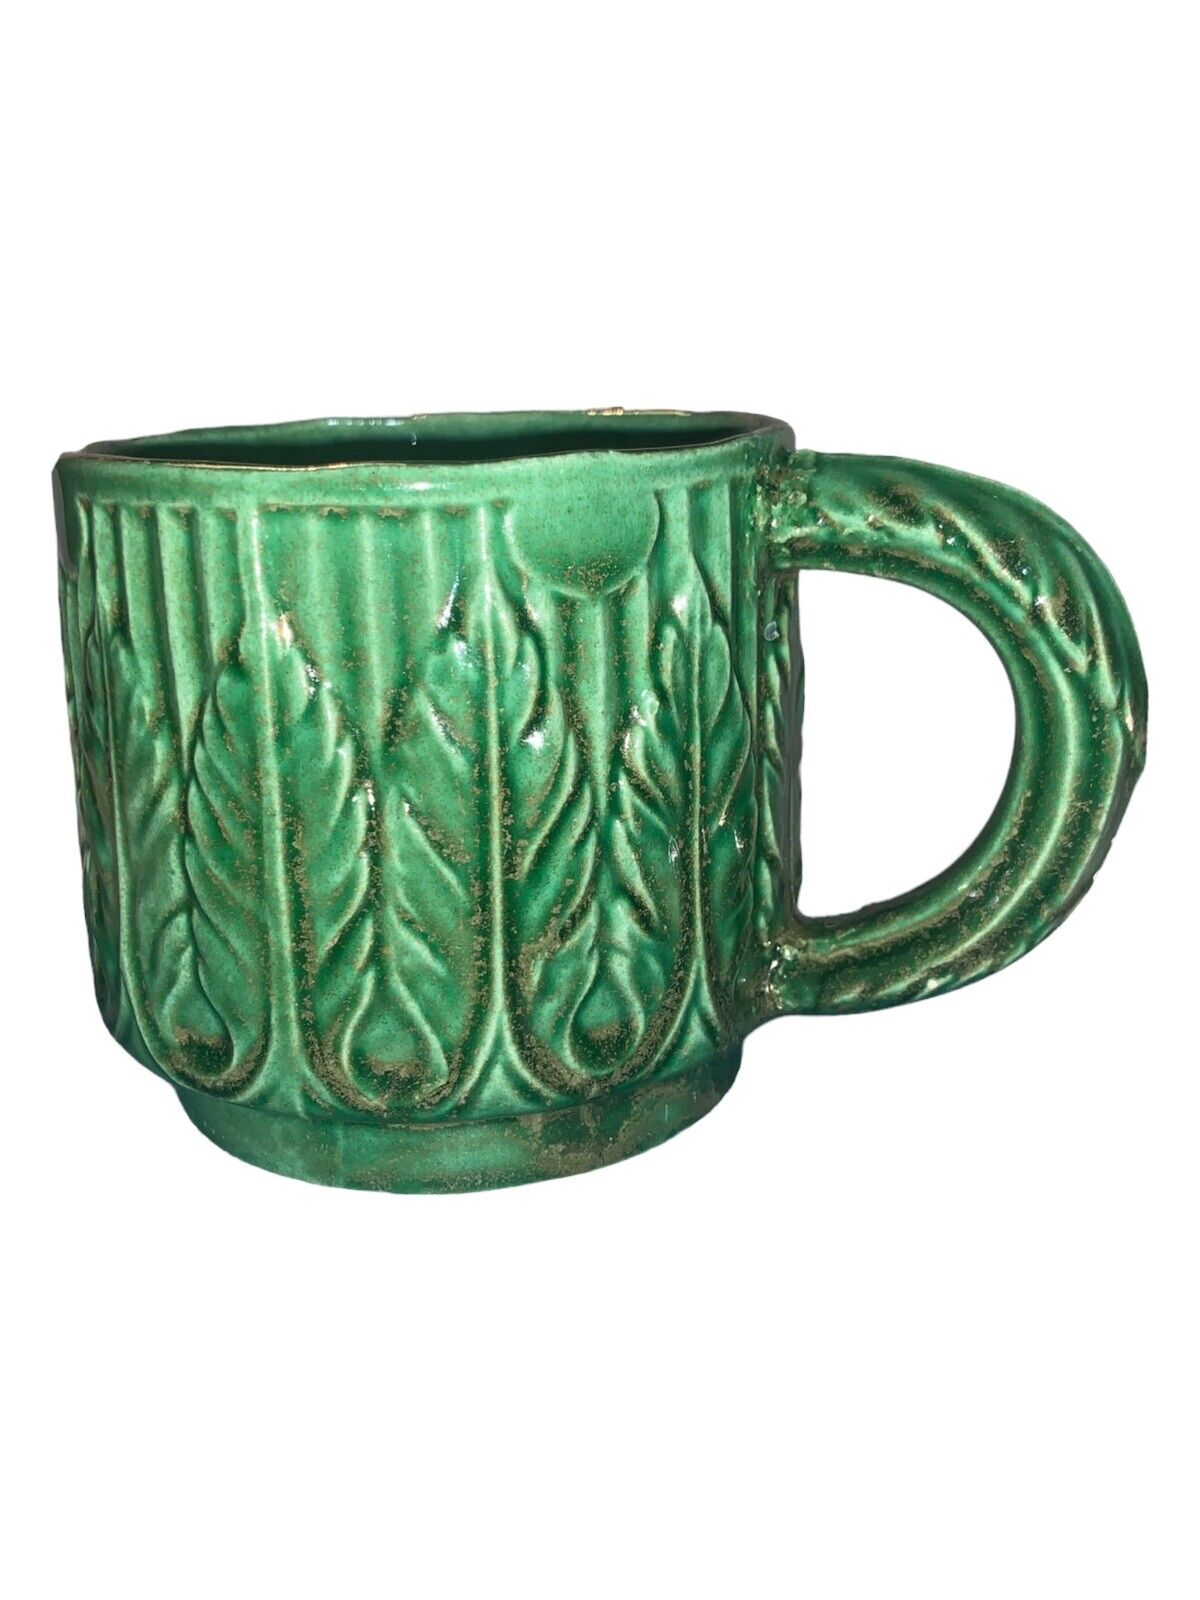 Vintage 1970s Green Coffee Mug Raised Art Deco Leaf  3 Inches Tall